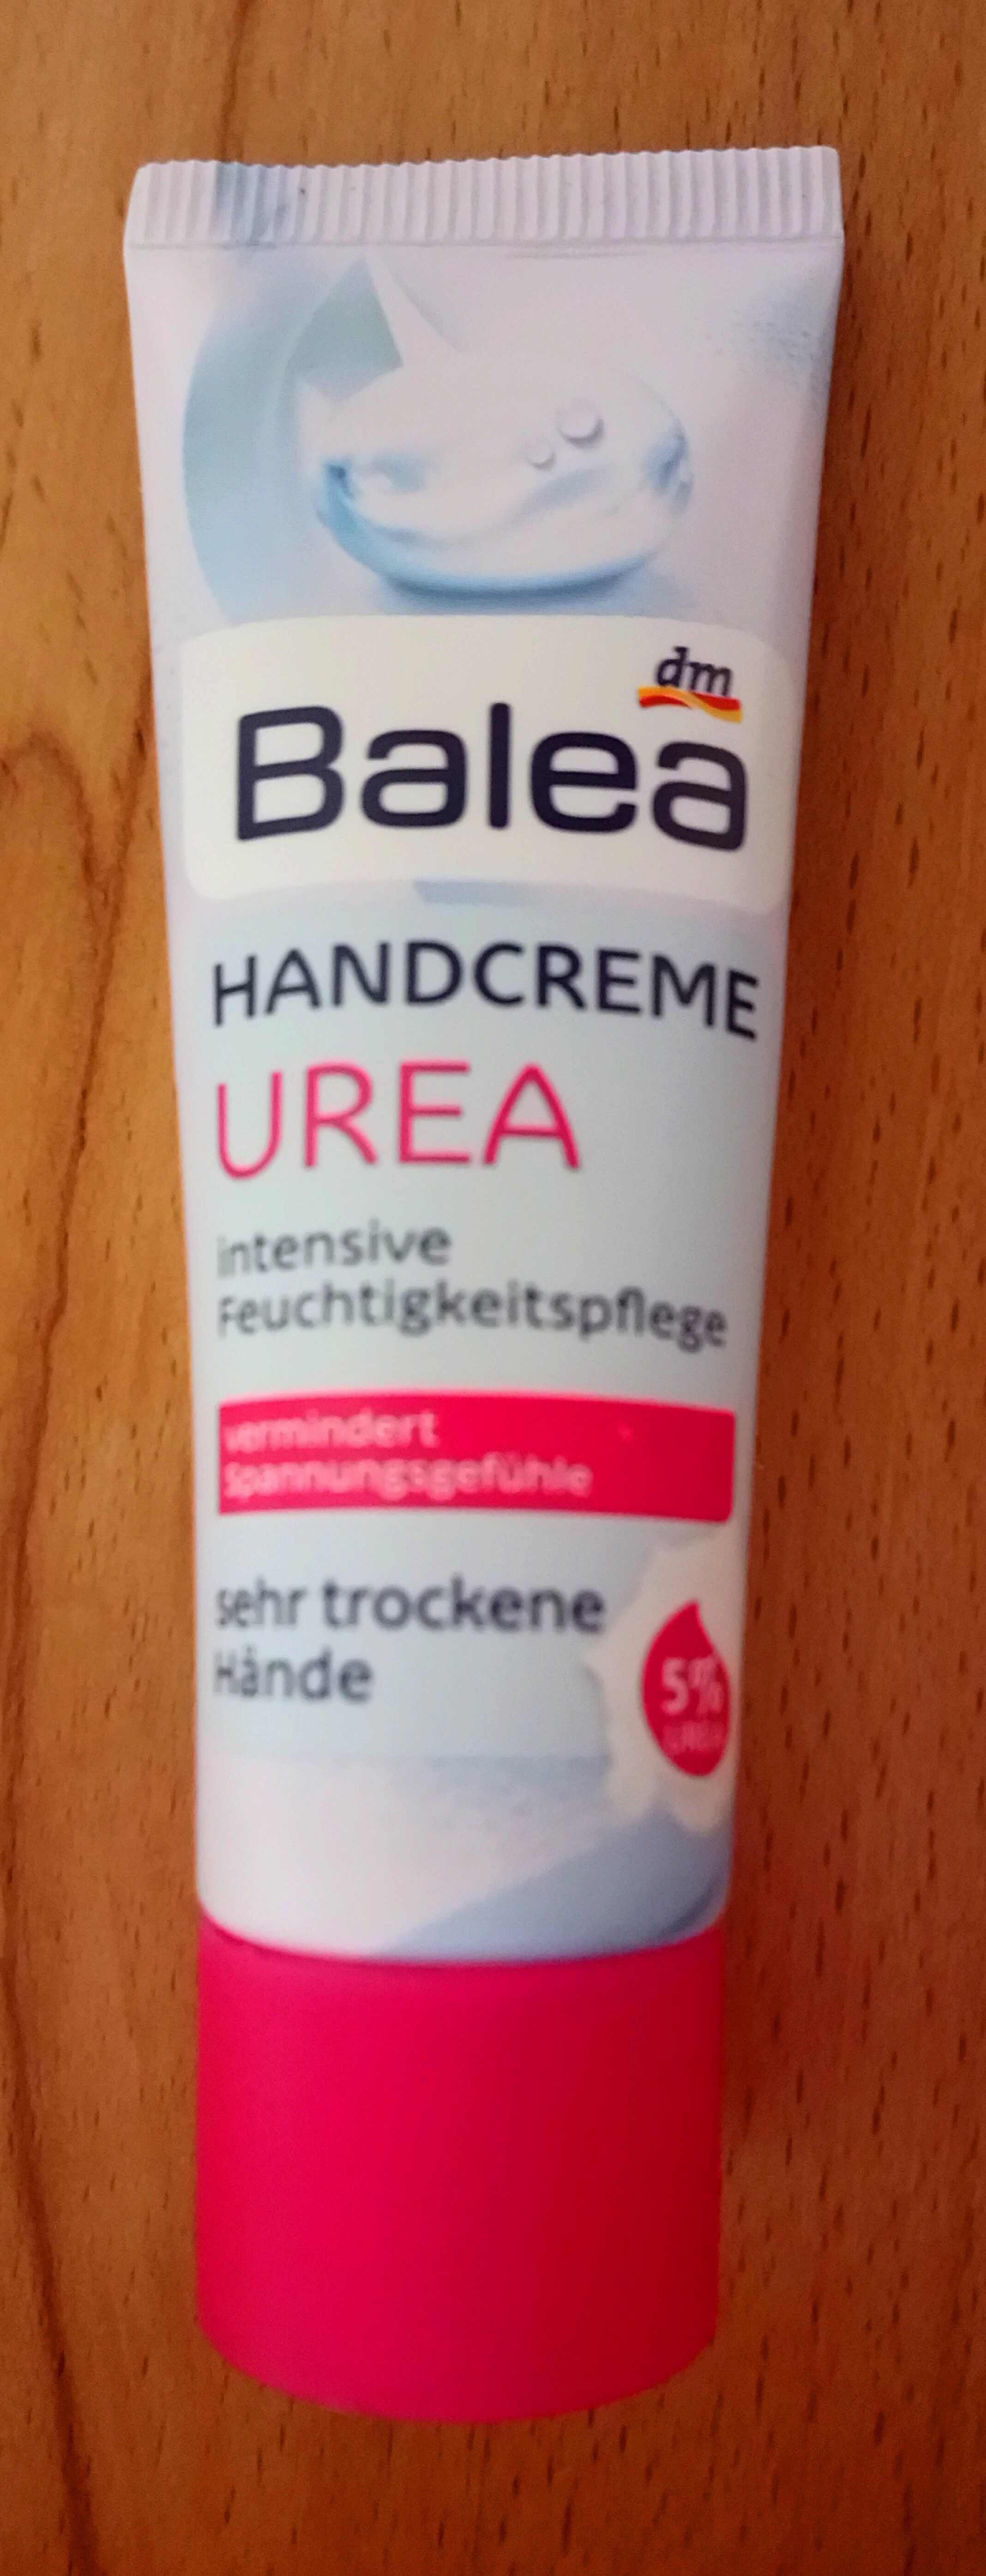 Handcreme Urea - Produit - de